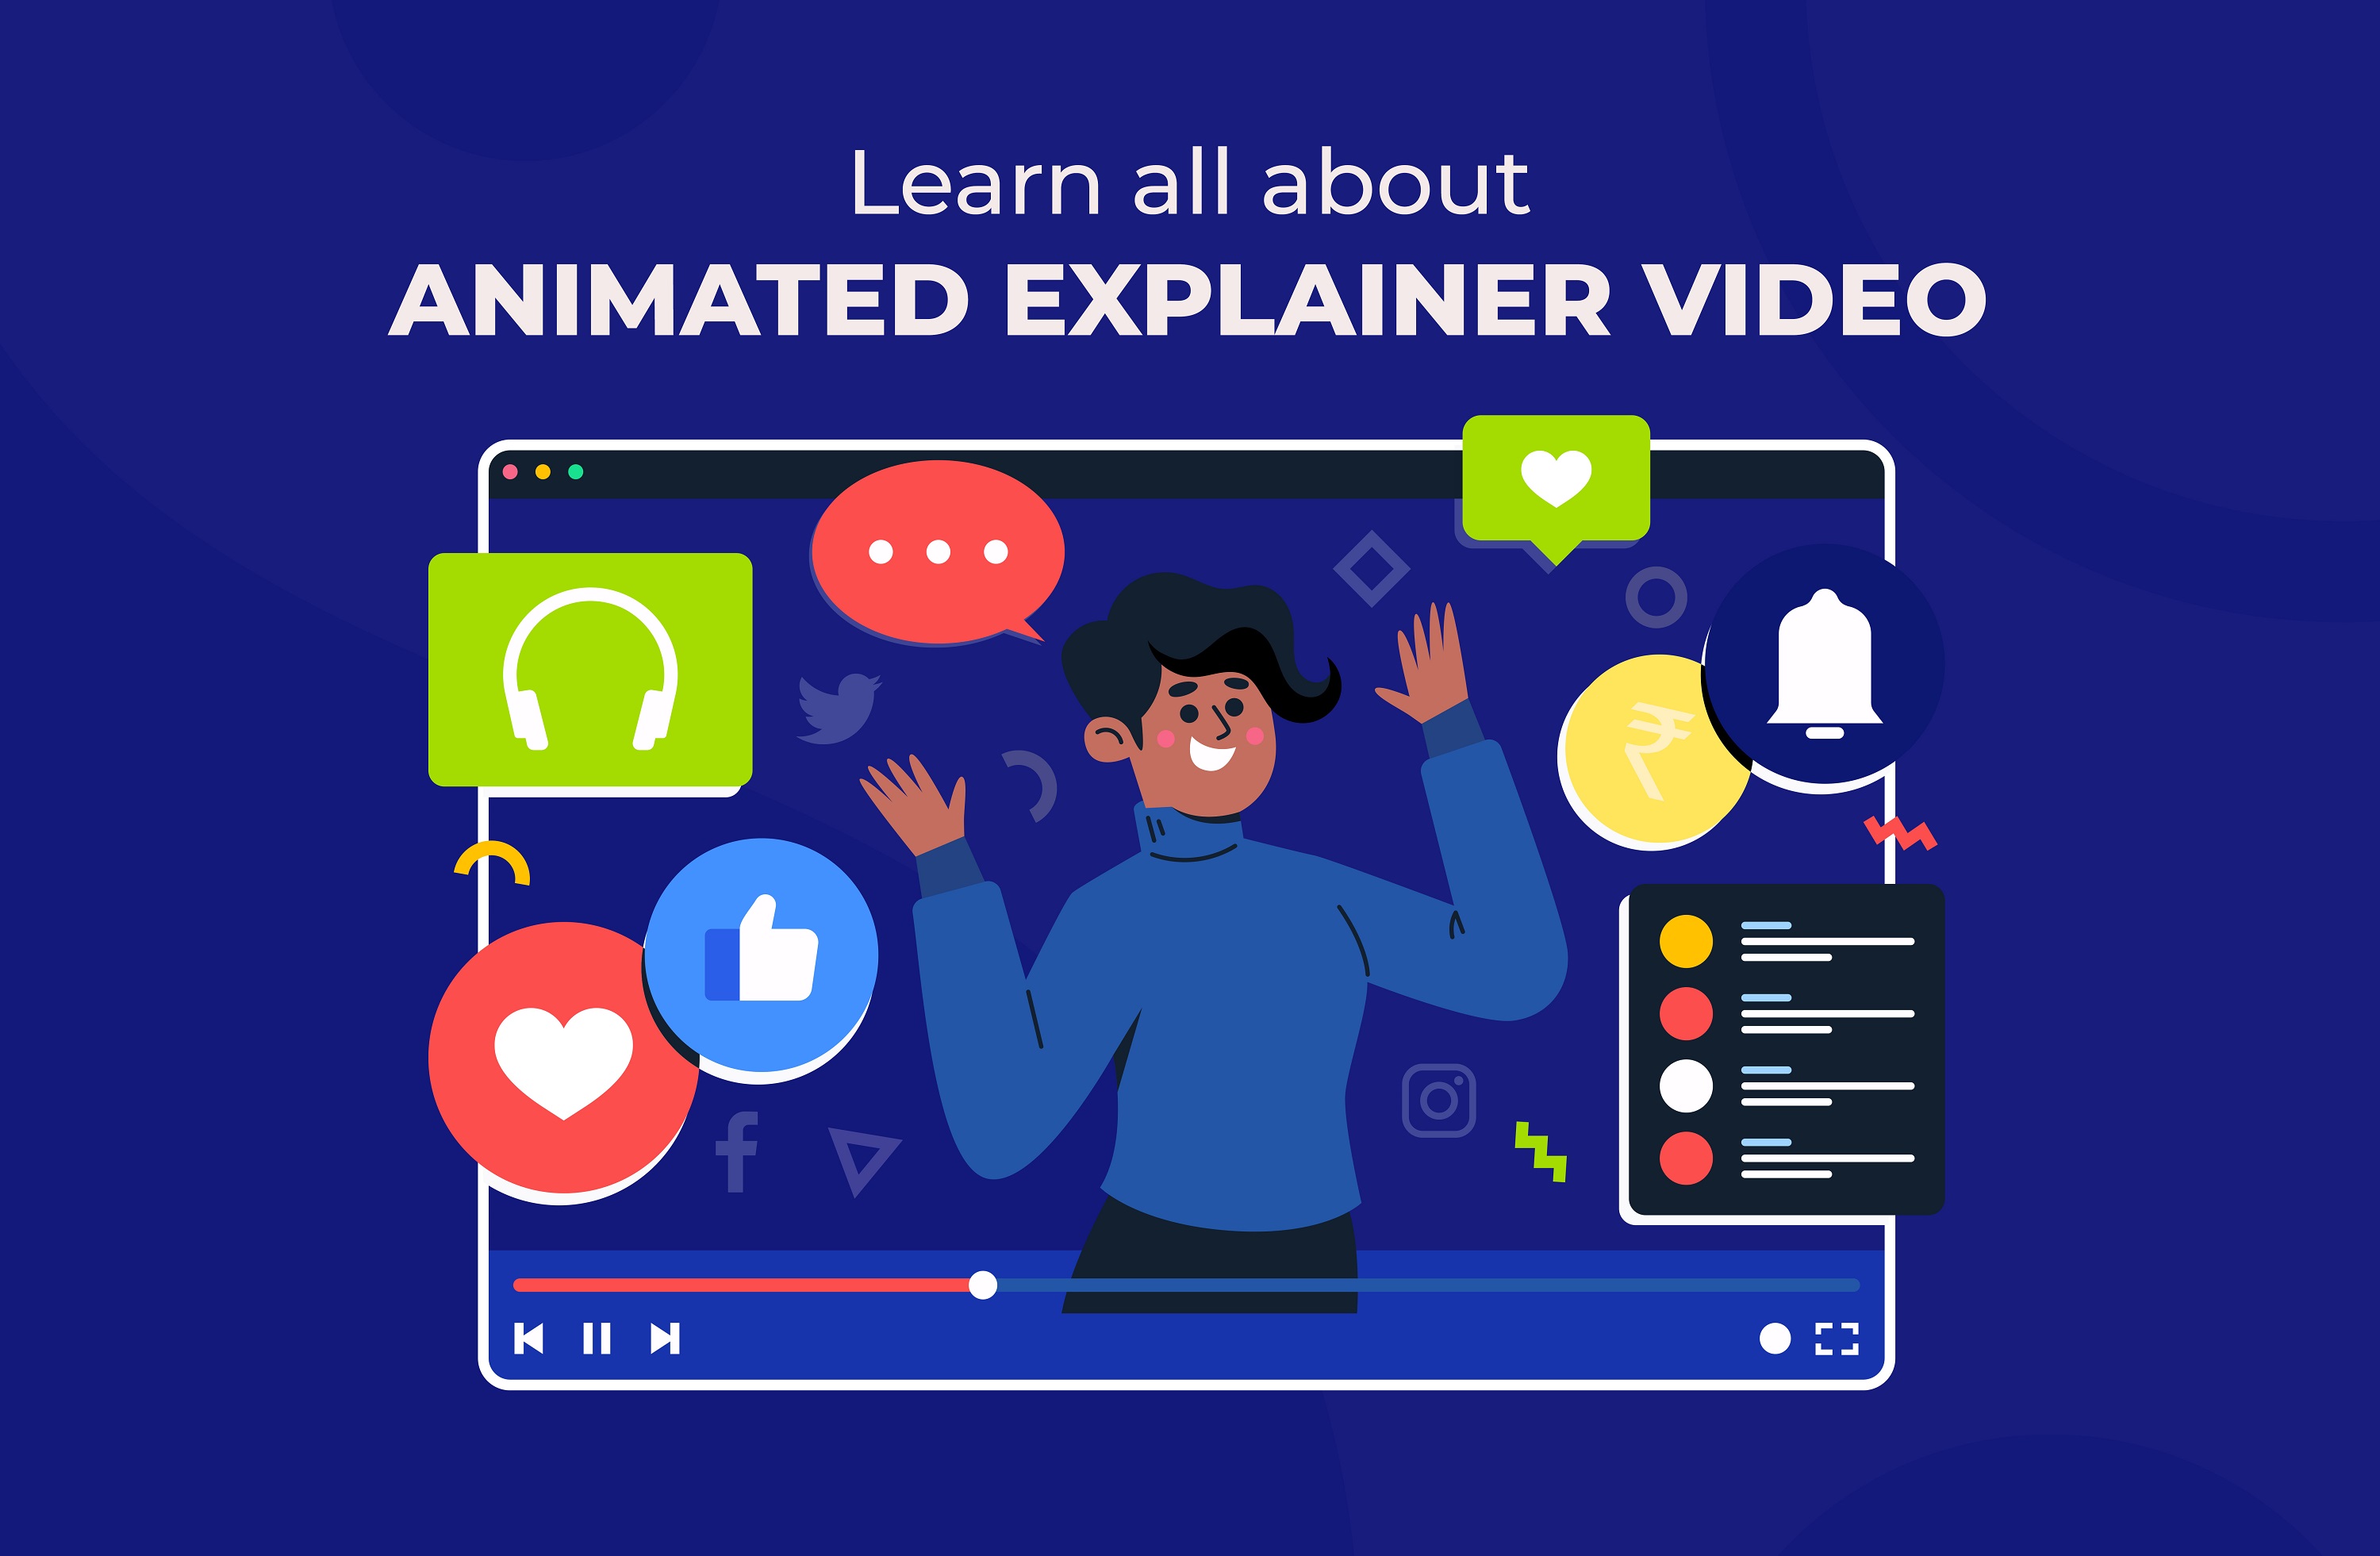 Animated Explainer Videos 101